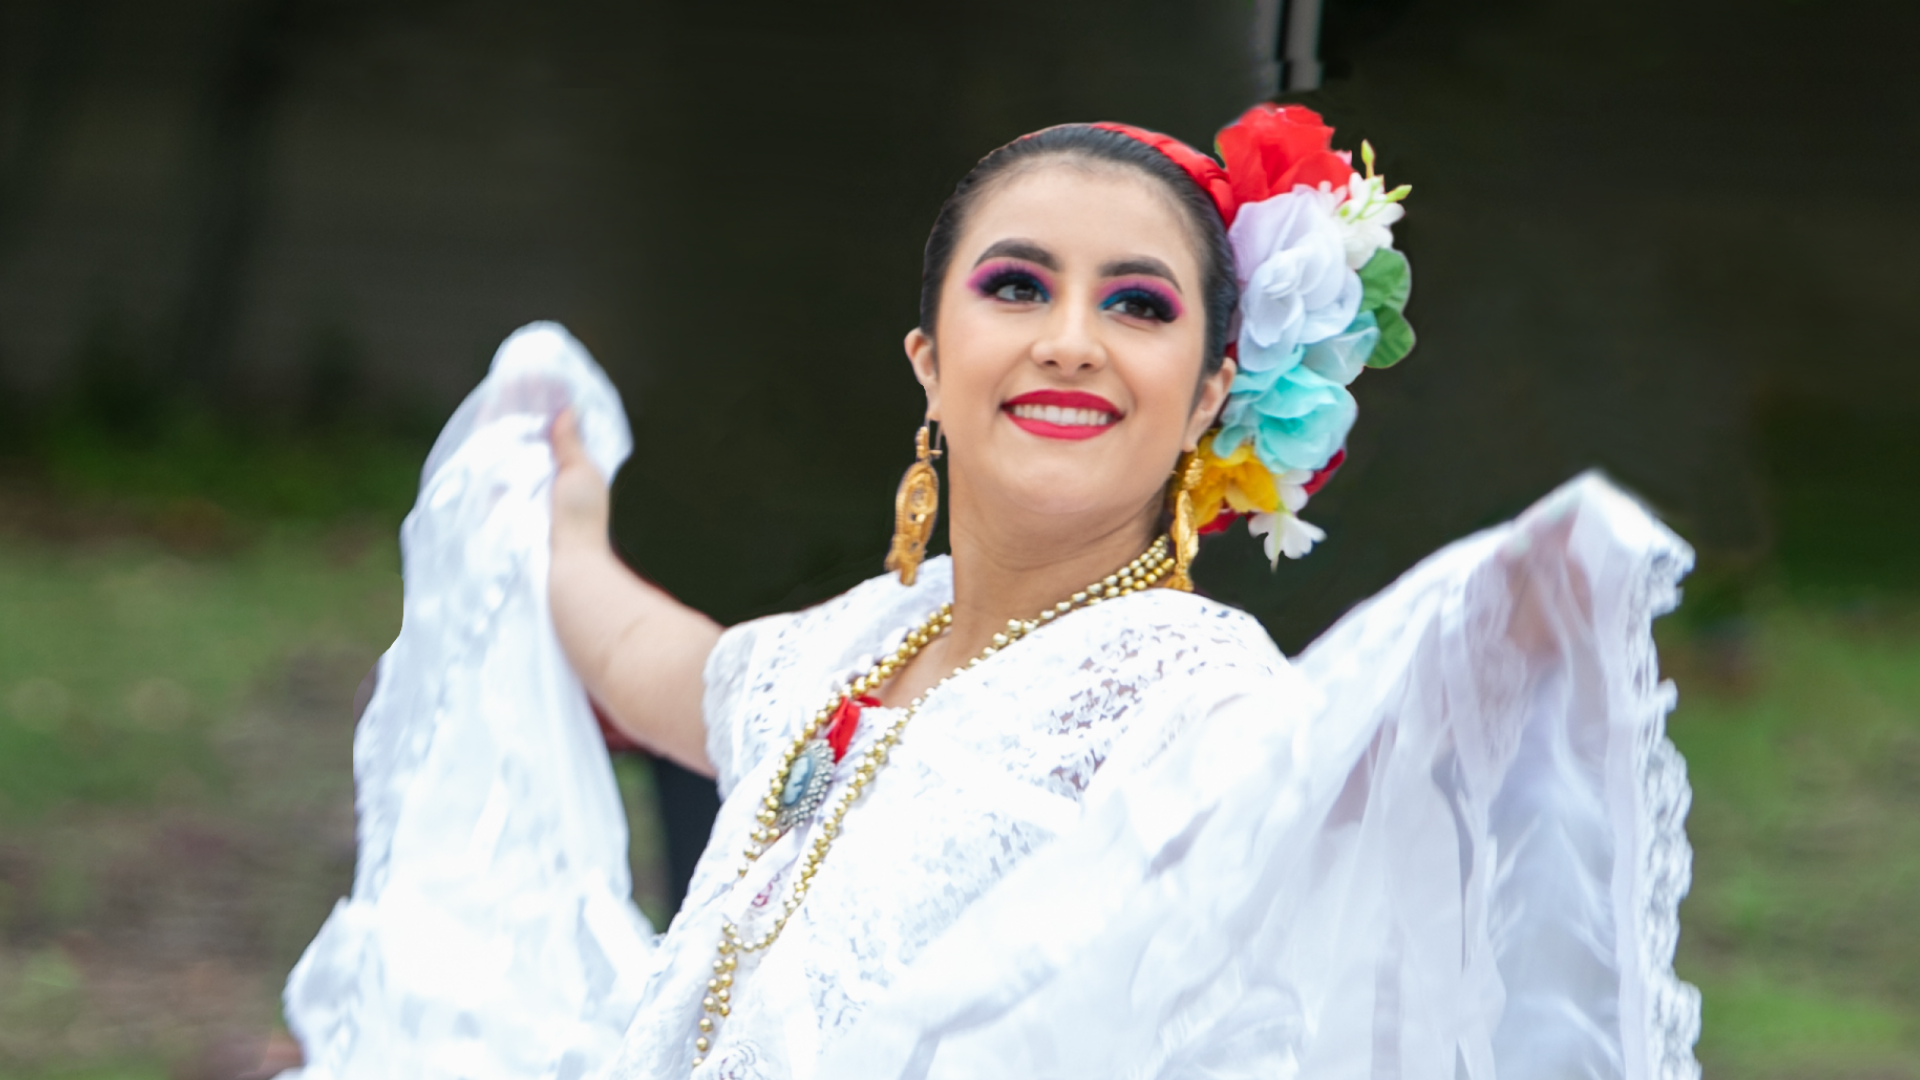 National Hispanic Heritage Month - Ballet Folklórico